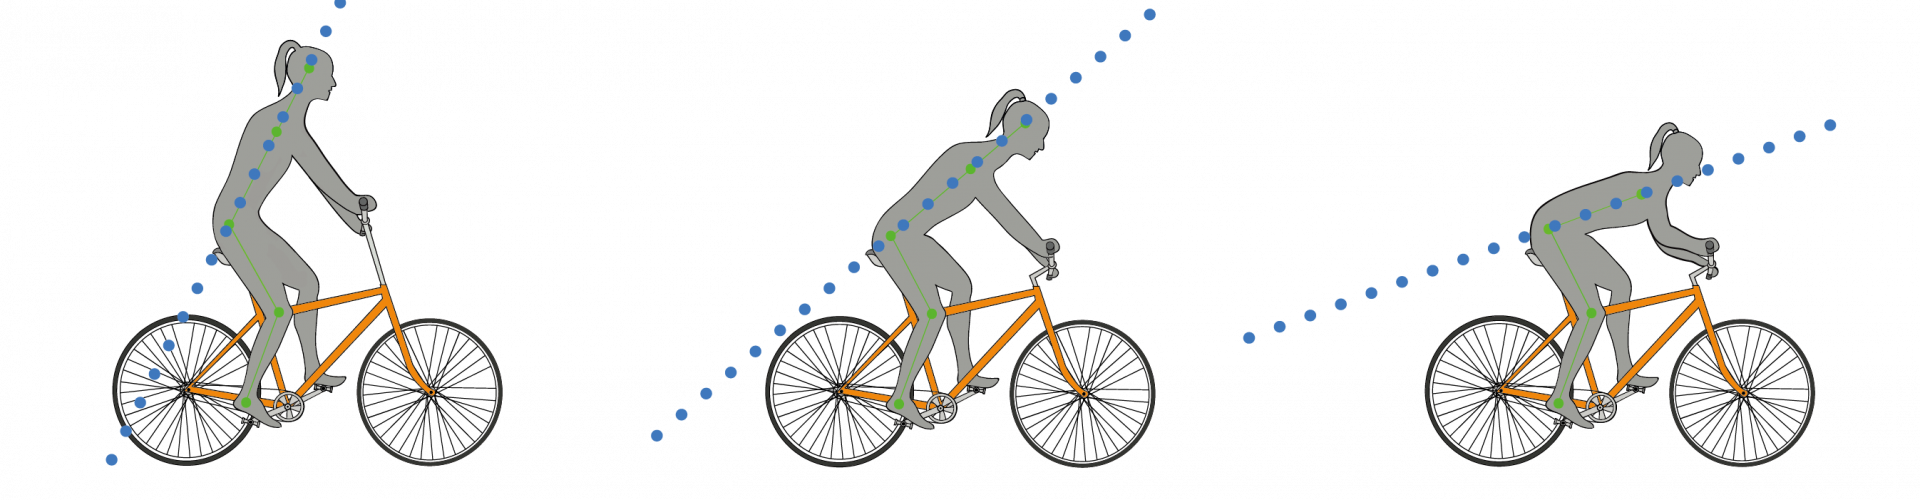 Road bike position: correct handle position